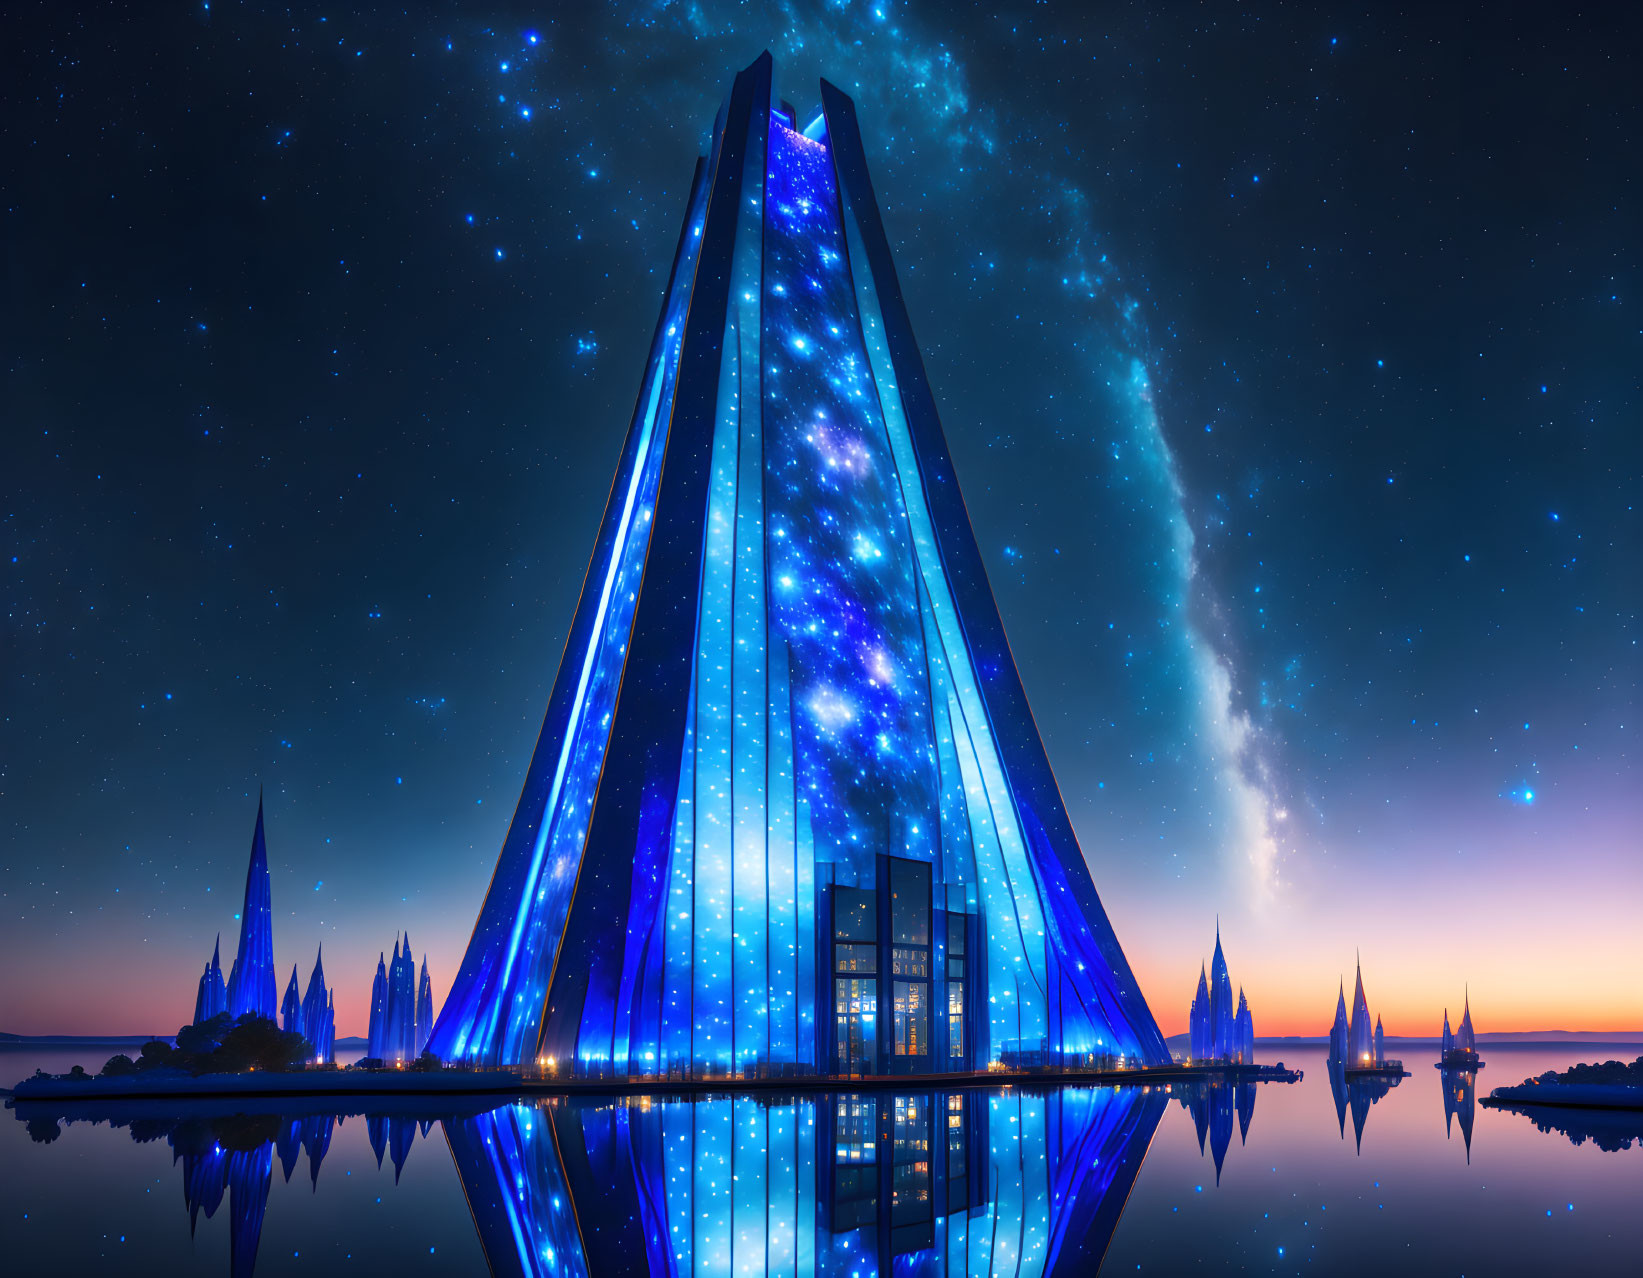 Futuristic skyscraper with glowing blue facade under starry night sky